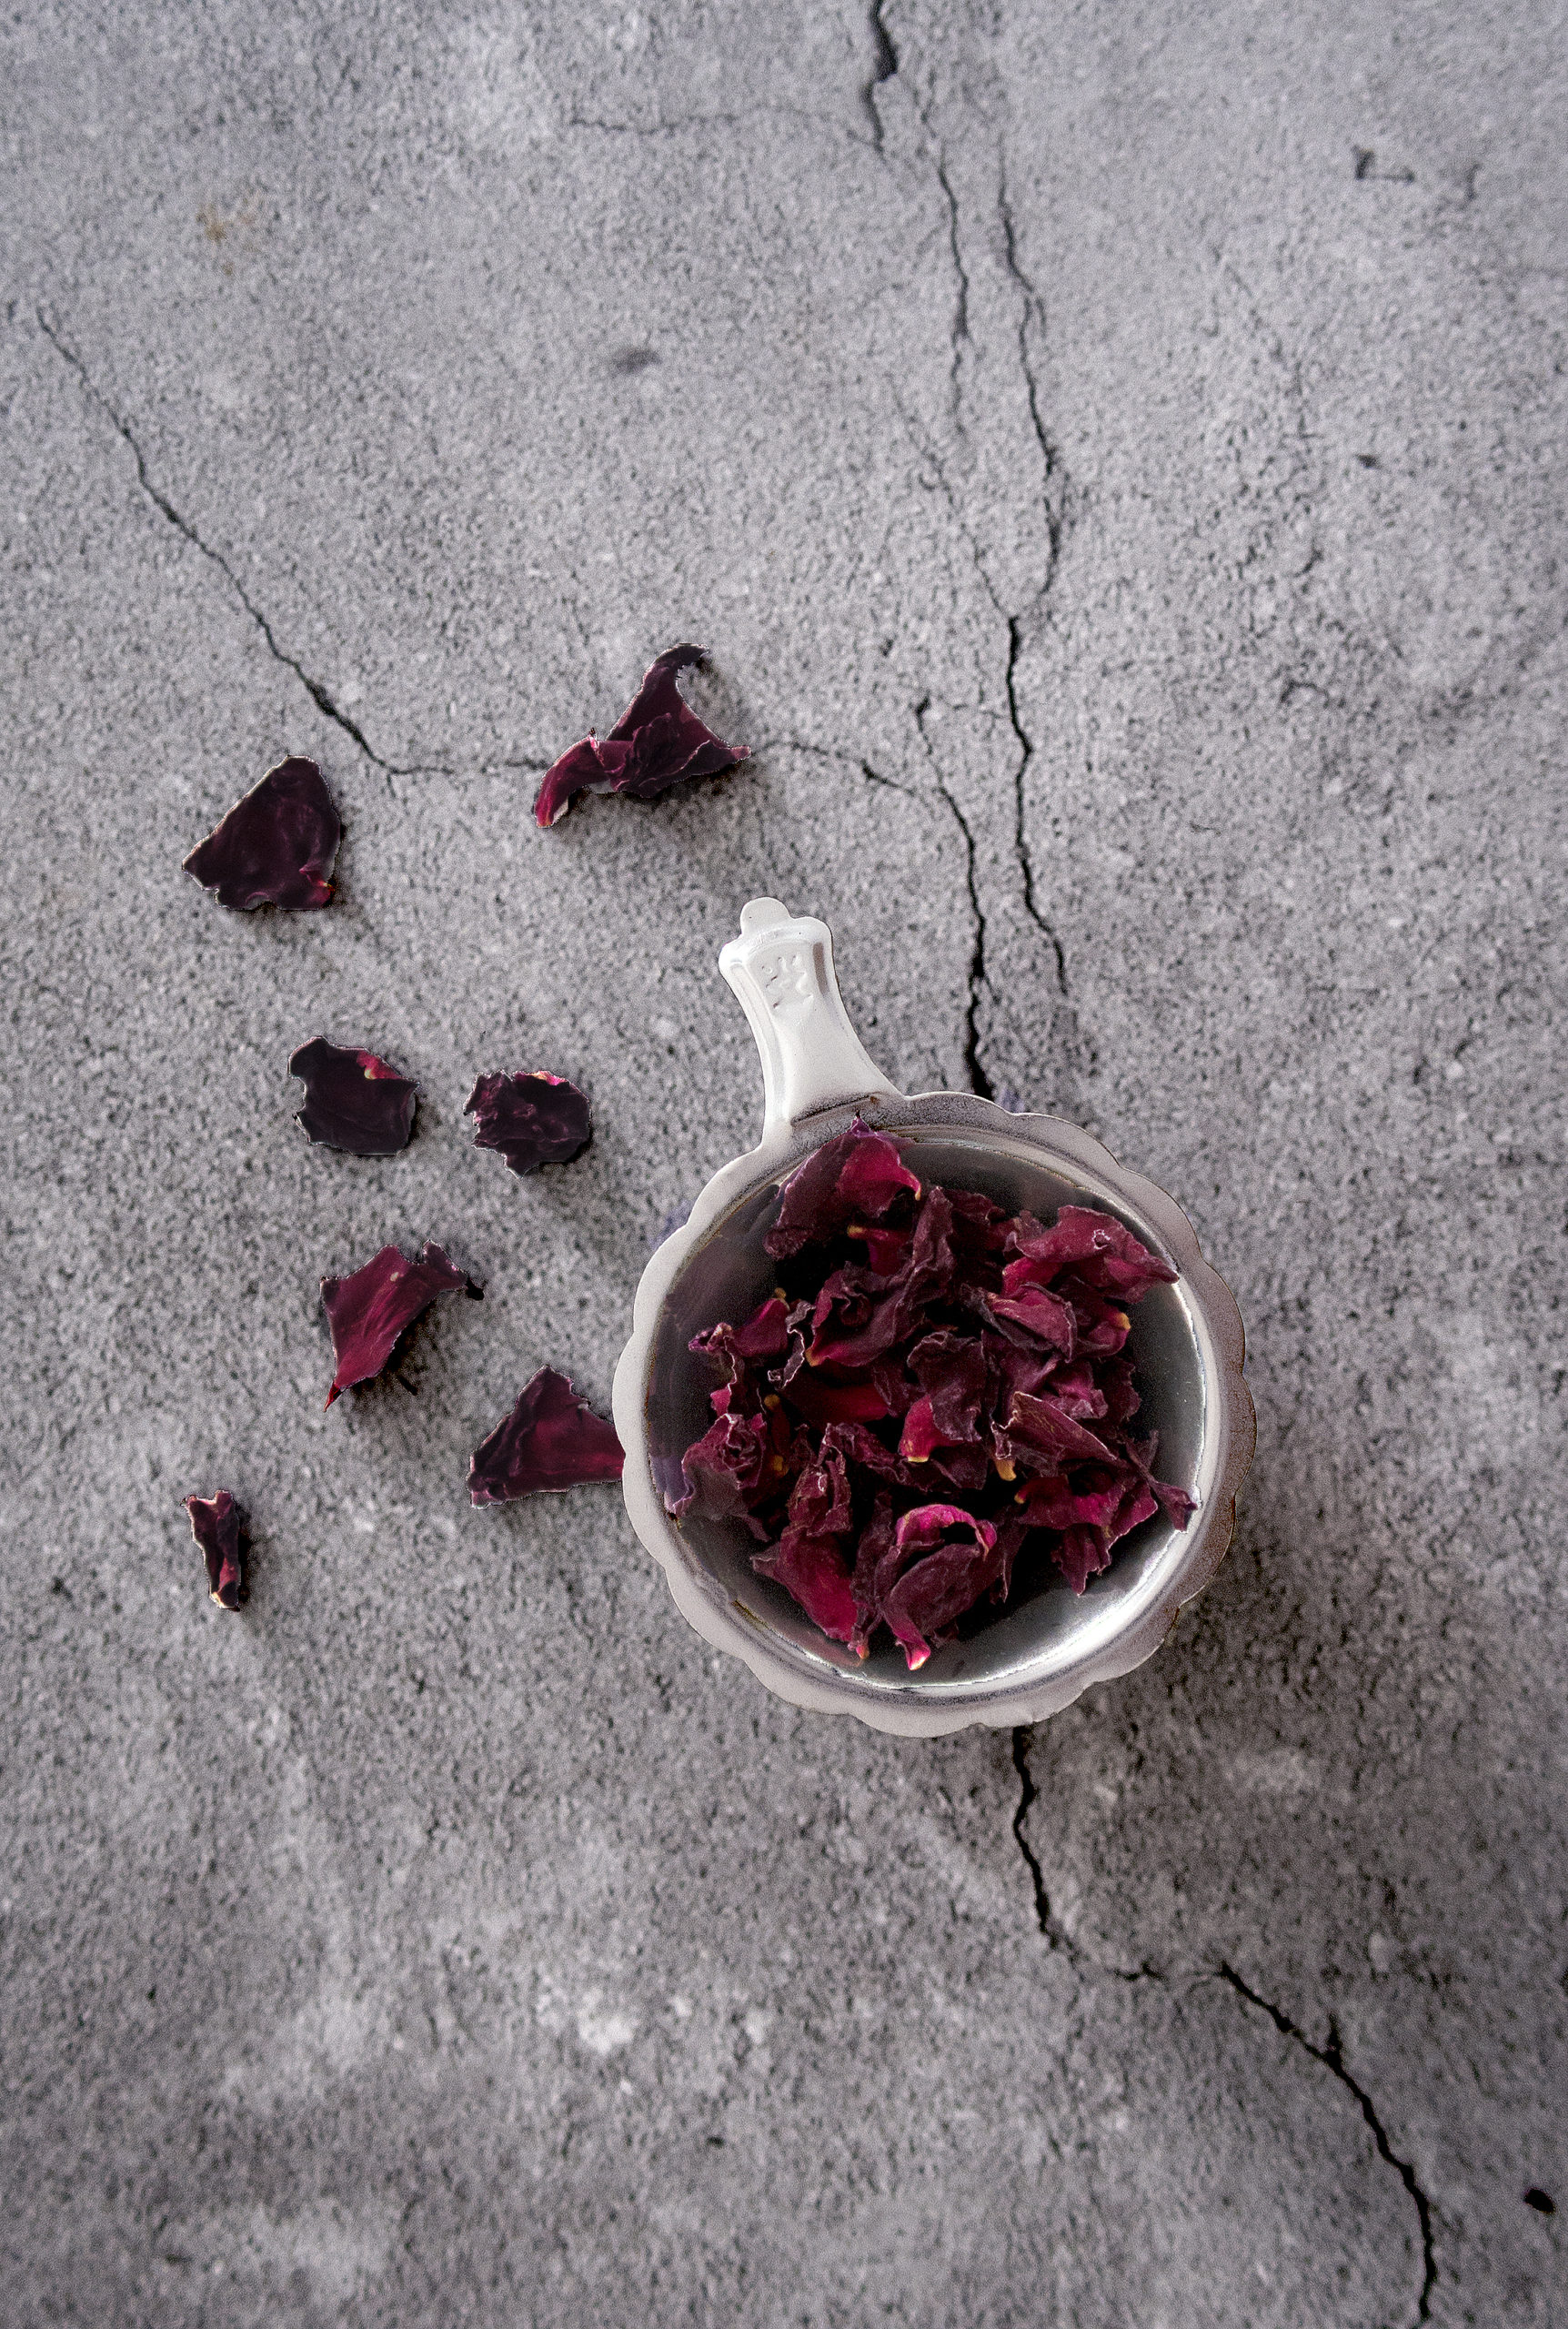 Pink Tea Rose petals, High Quality, Natural, Organic, Biodegraddable, –  UkrainianFlowersShop